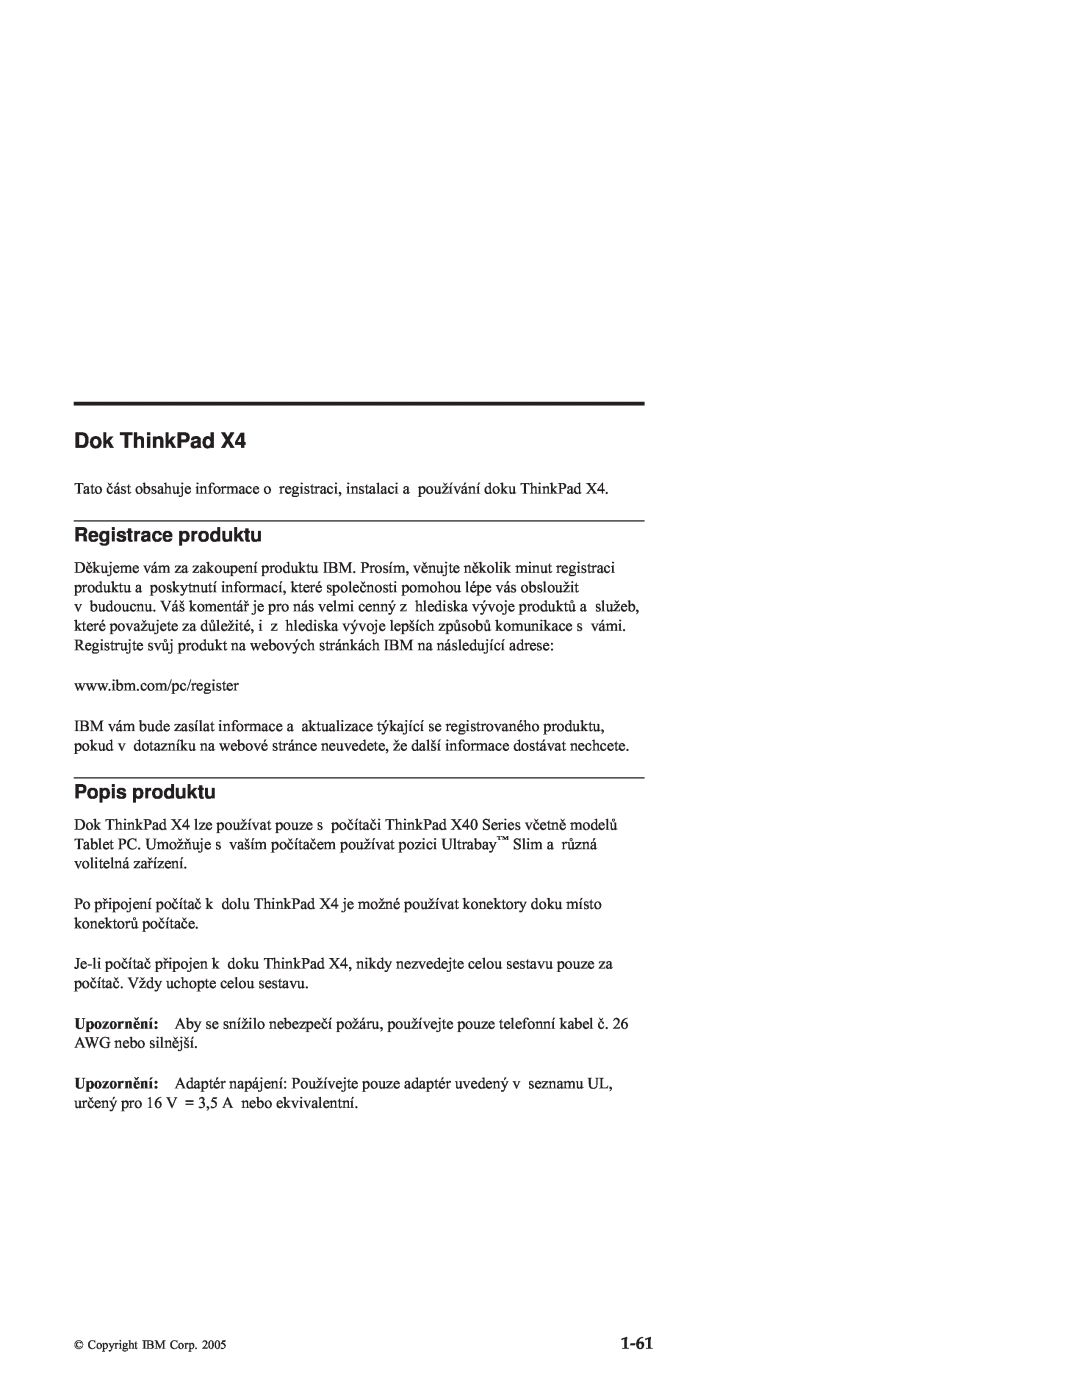 IBM X4 manual Dok ThinkPad, Registrace produktu, Popis produktu 